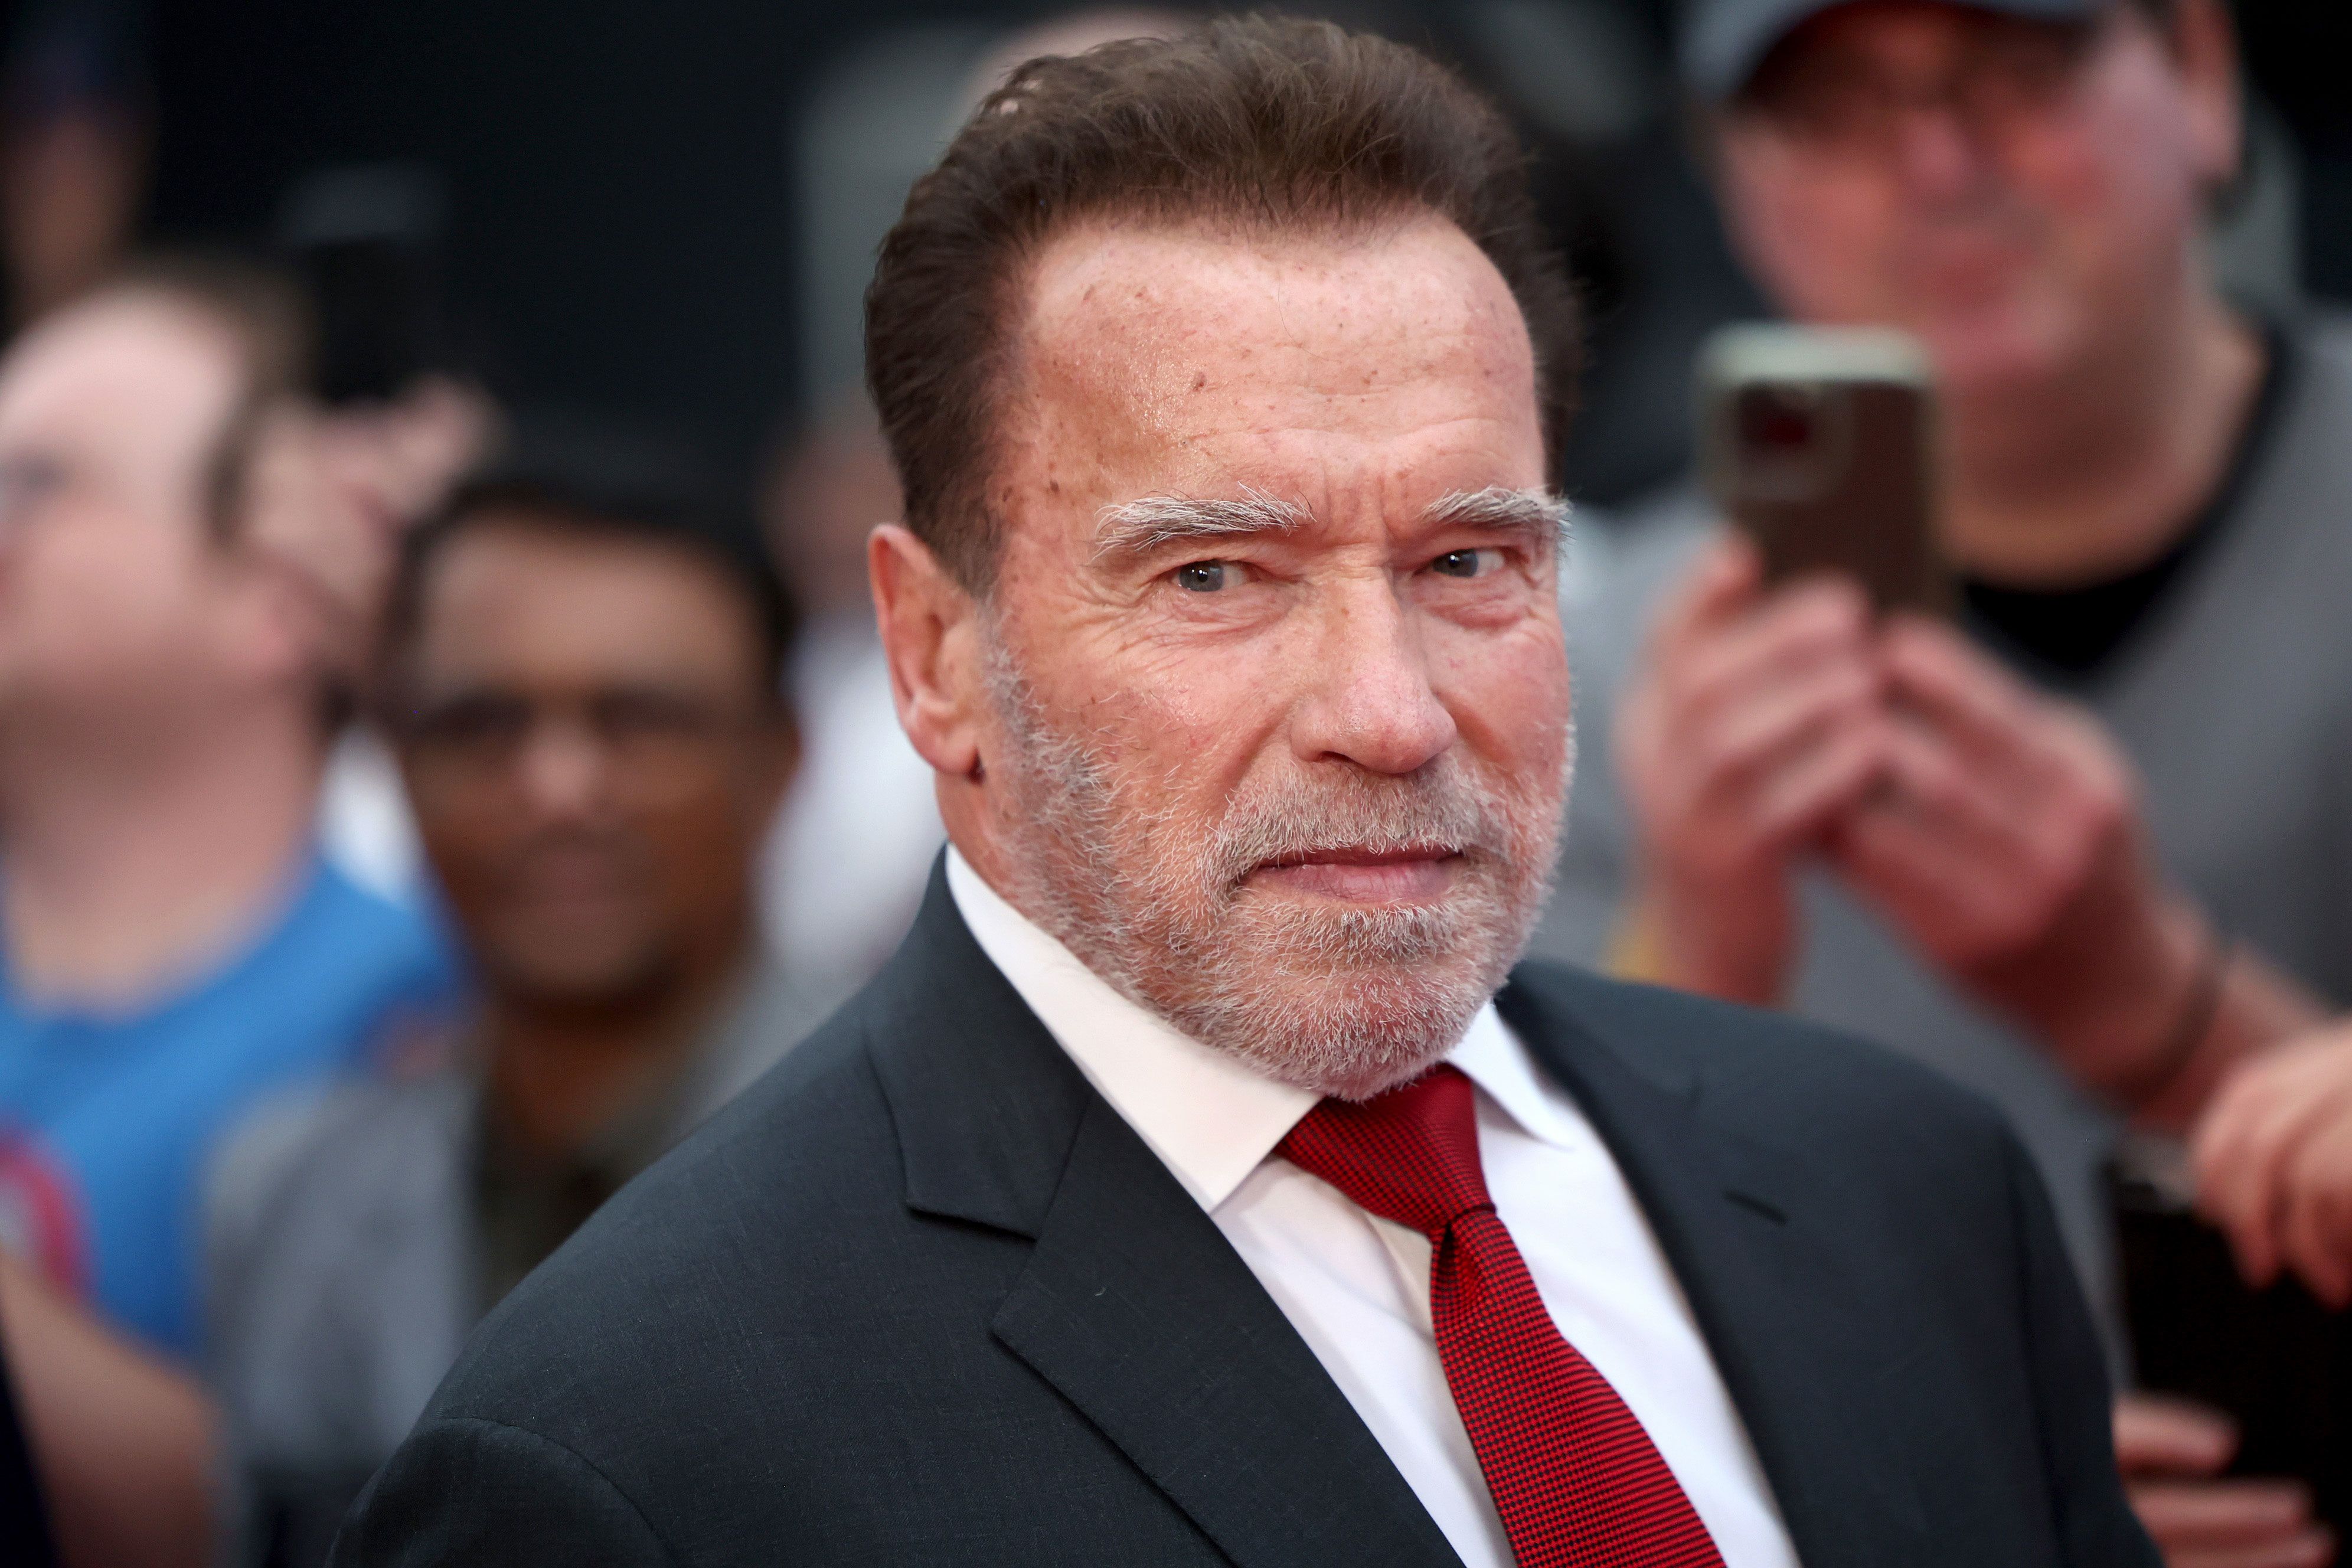 Arnold Schwarzenegger acknowledges he is a mere mortal when it